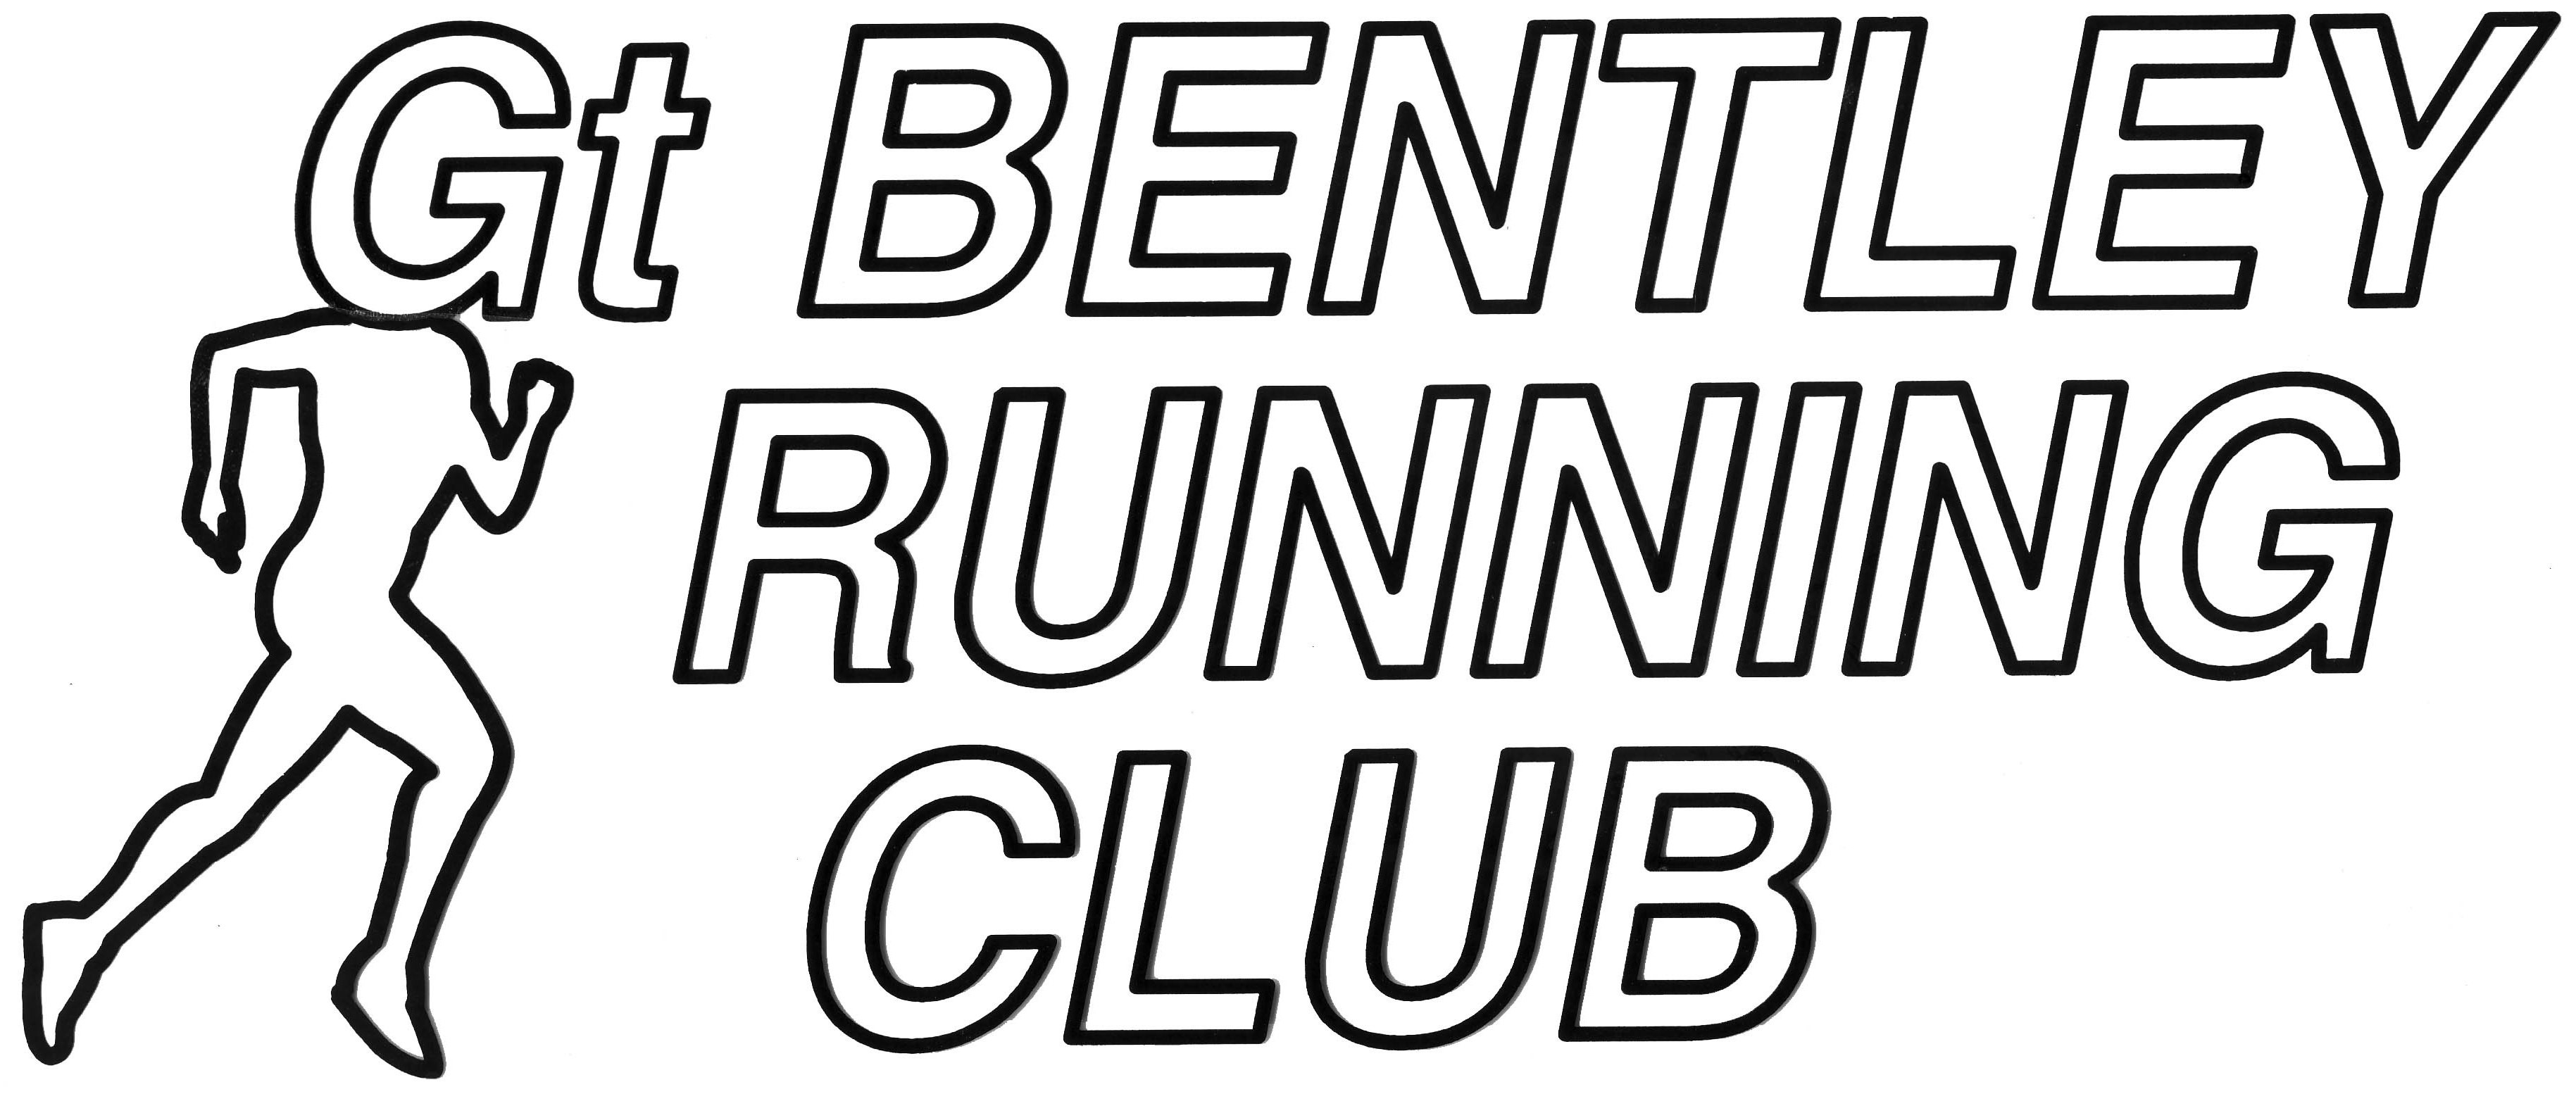 Image for Great Bentley 1/2 Marathon